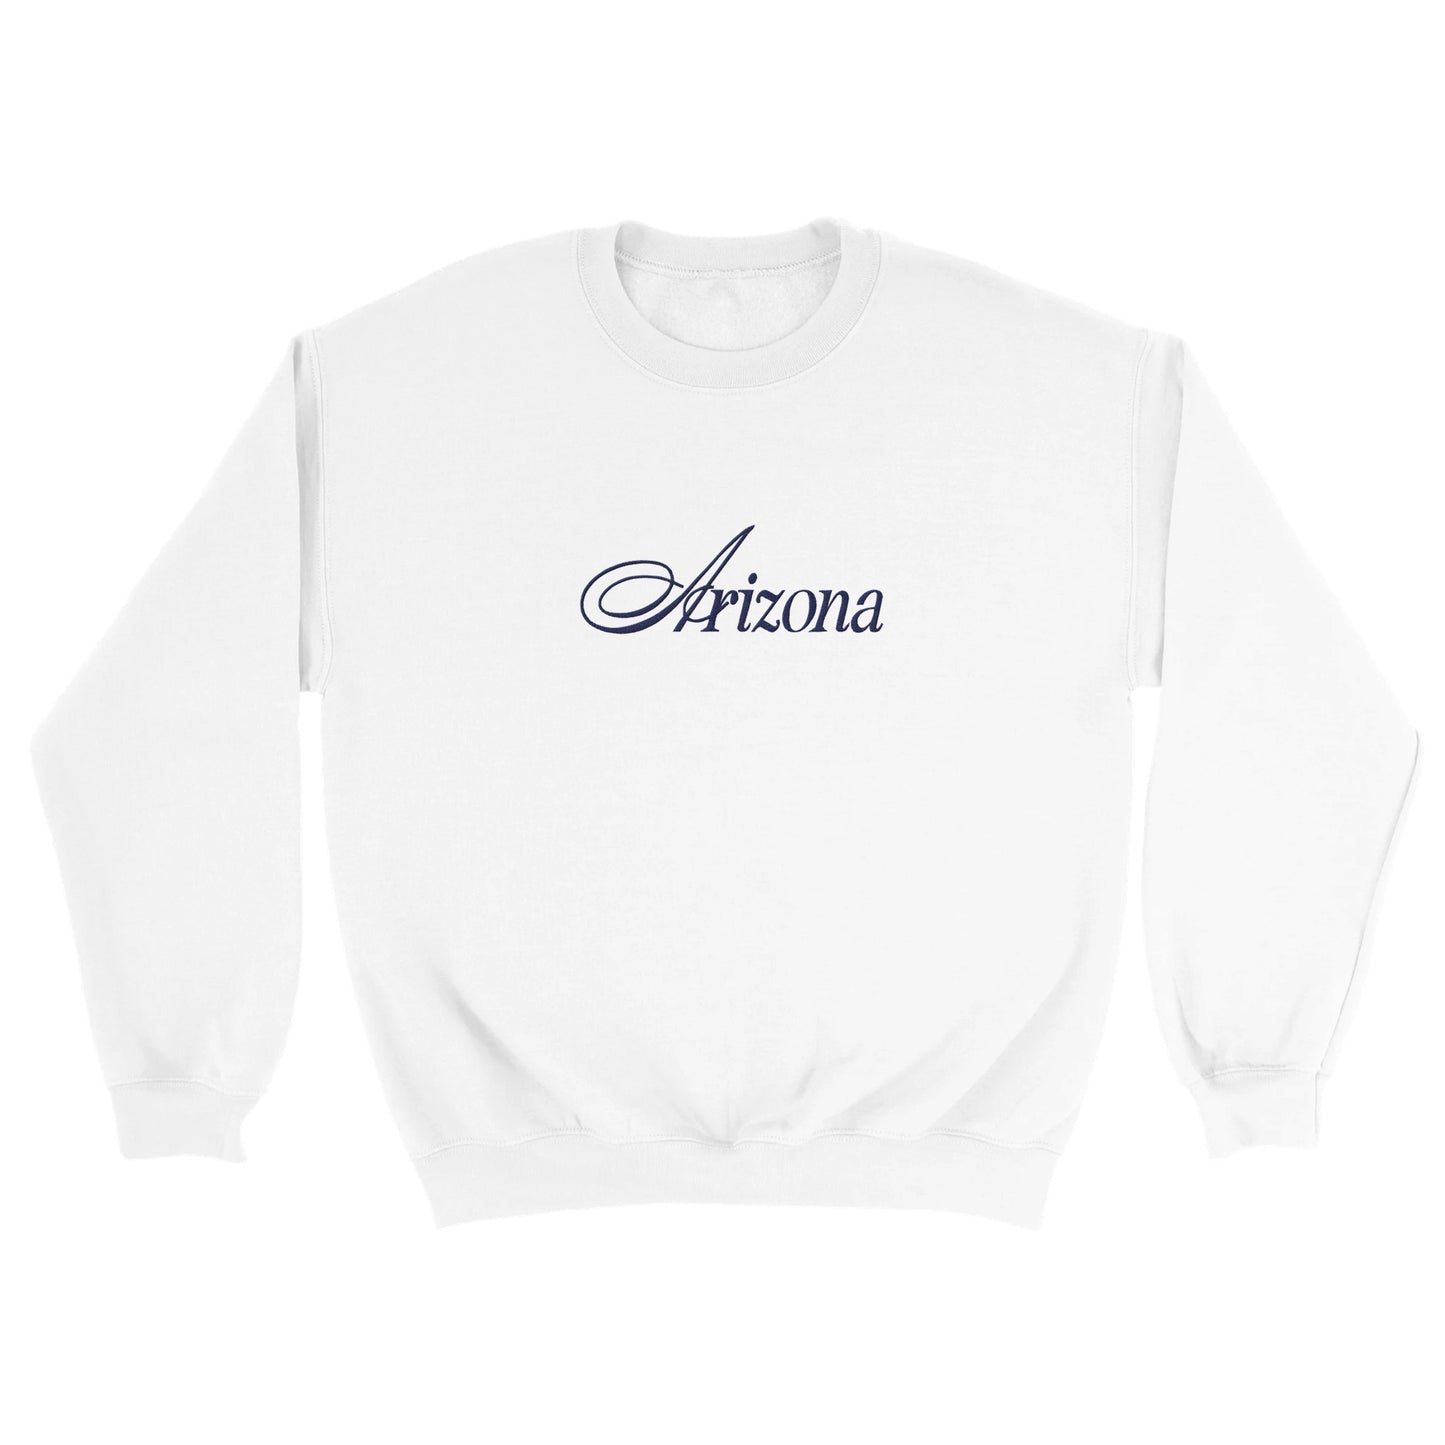 Arizona State Embroidered Unisex Sweatshirt